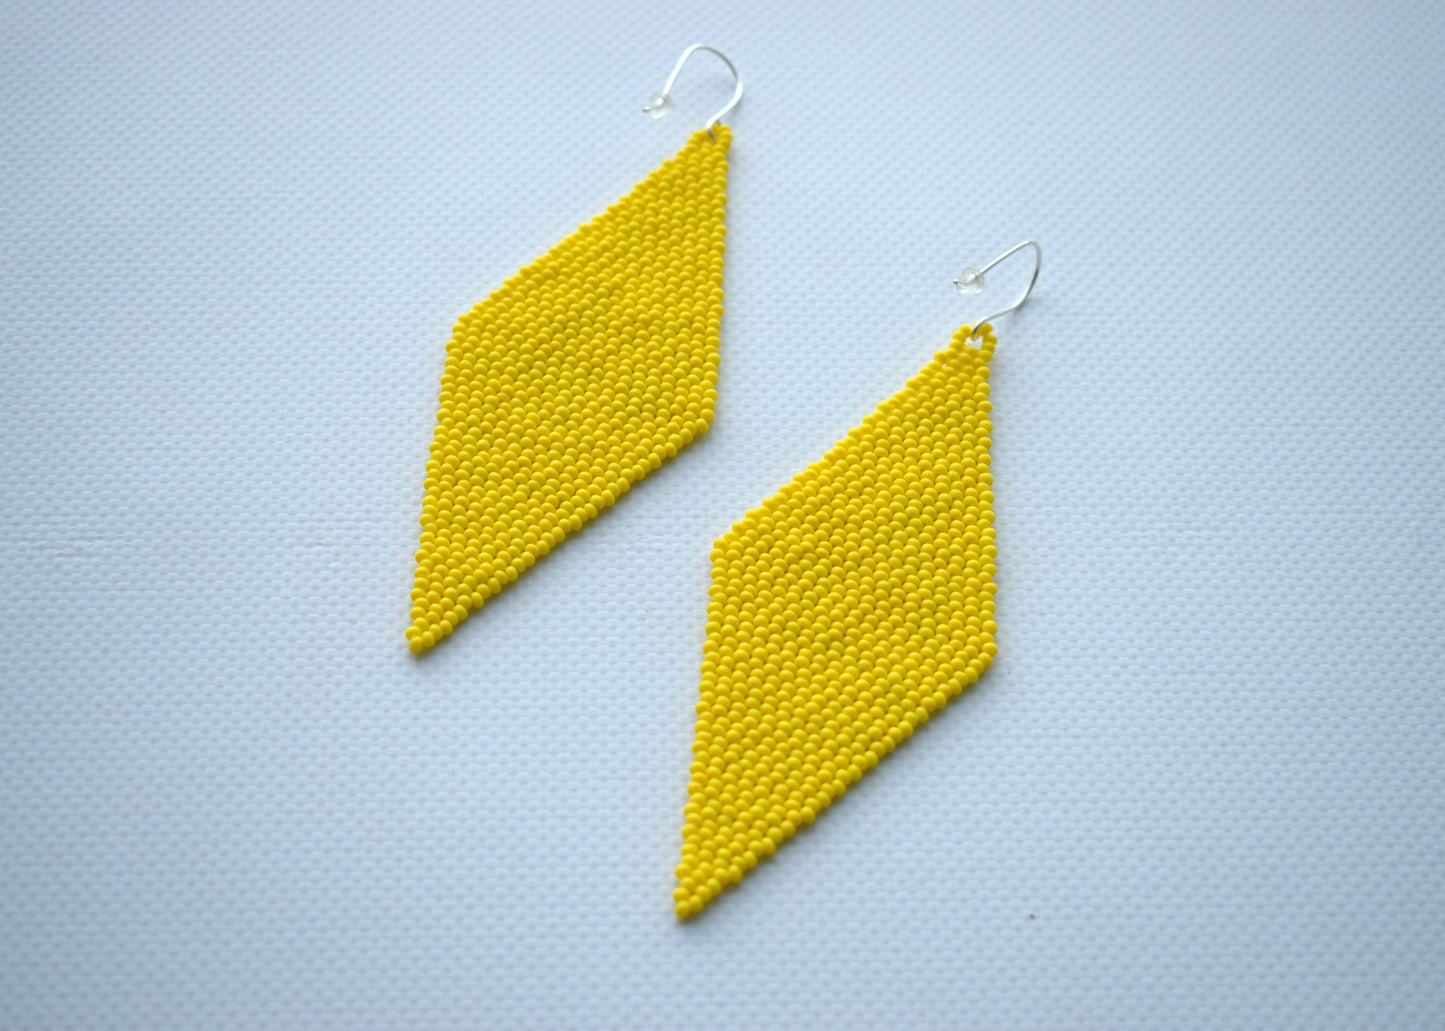 Yellow earrings